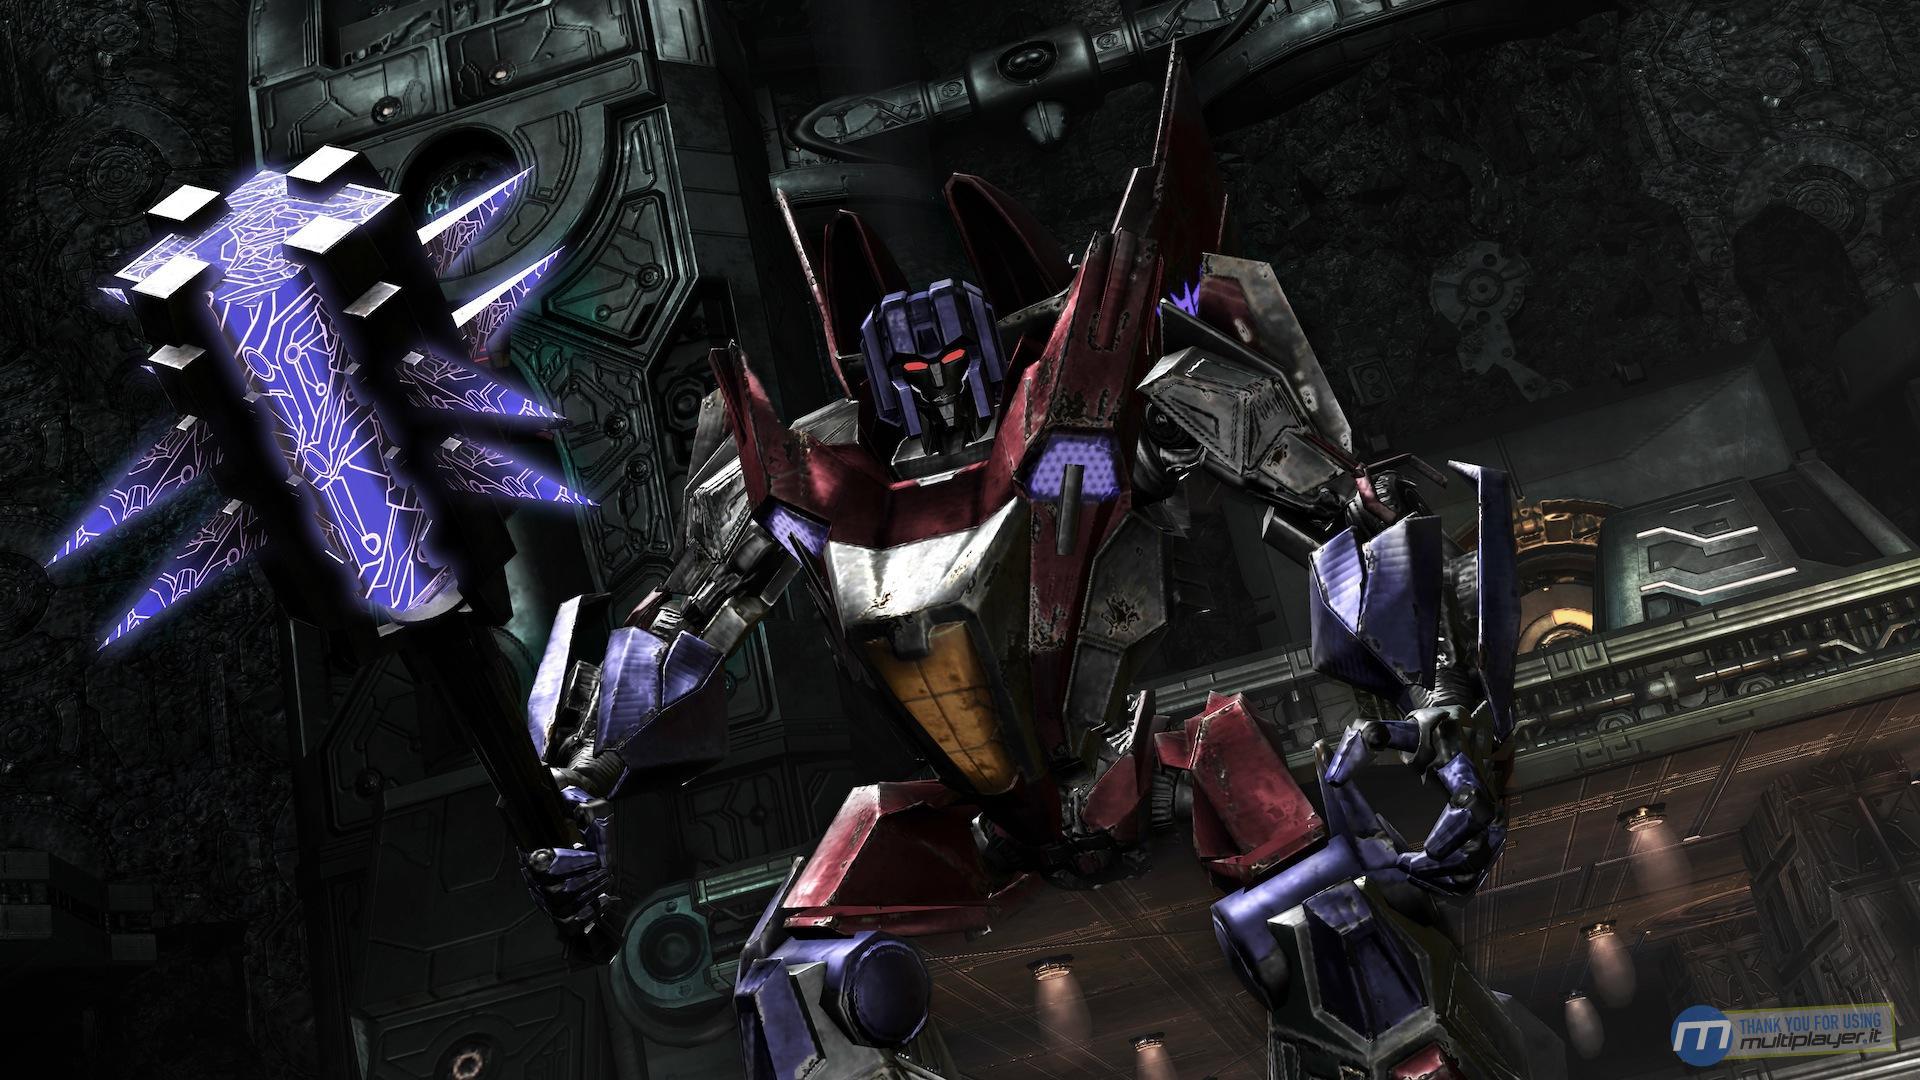 Wfc Starscream Game. Teletraan I: The Transformers